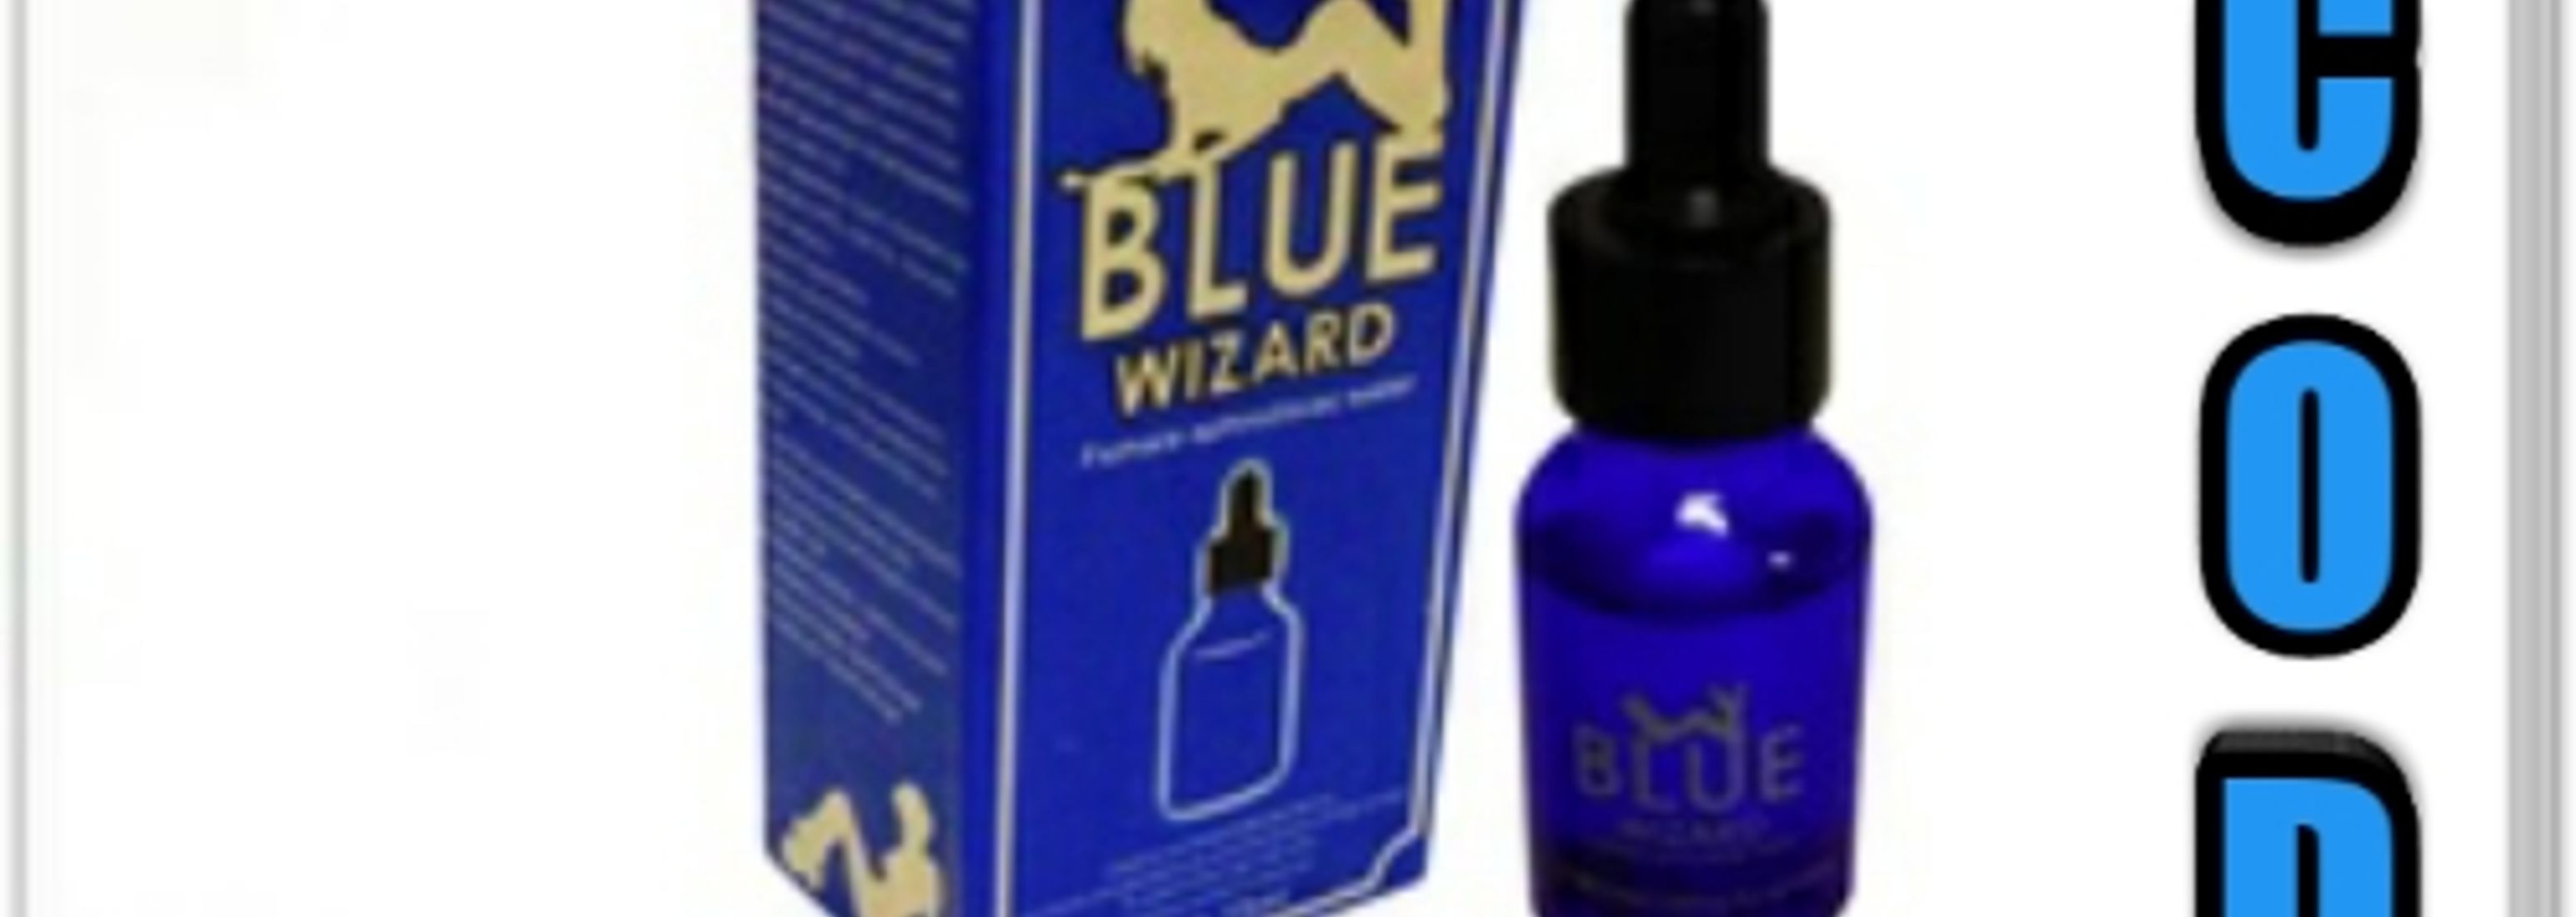 Blue wizard drops